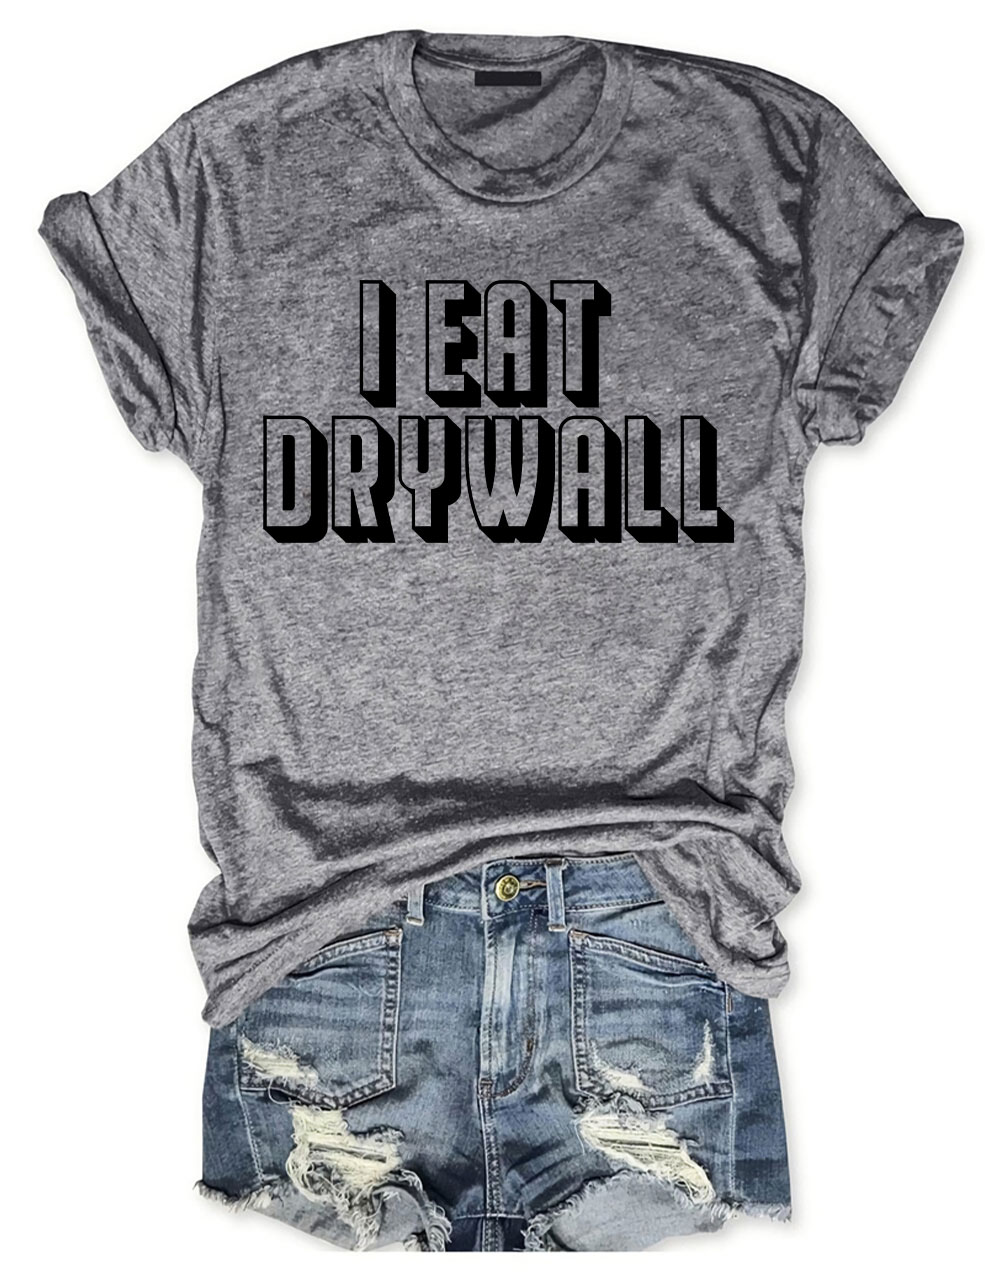 I Eat Drywall T-shirt